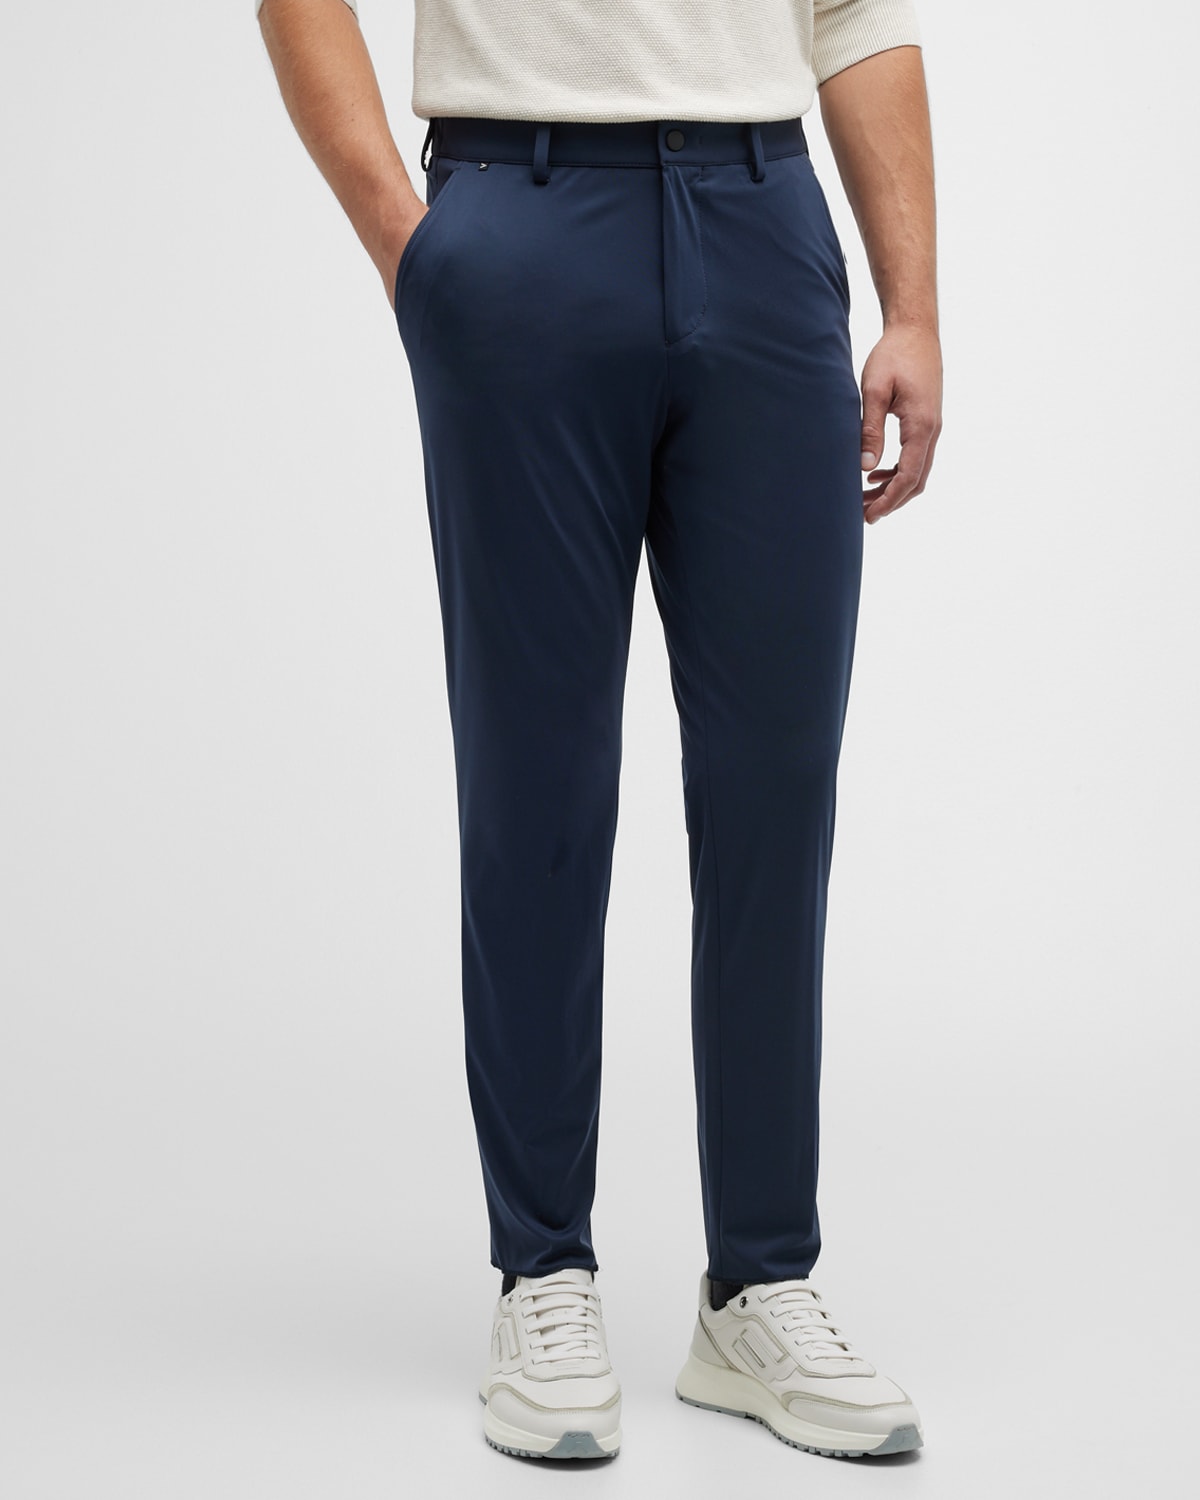 Men's Jersey Quality Nylon Stretch Pants